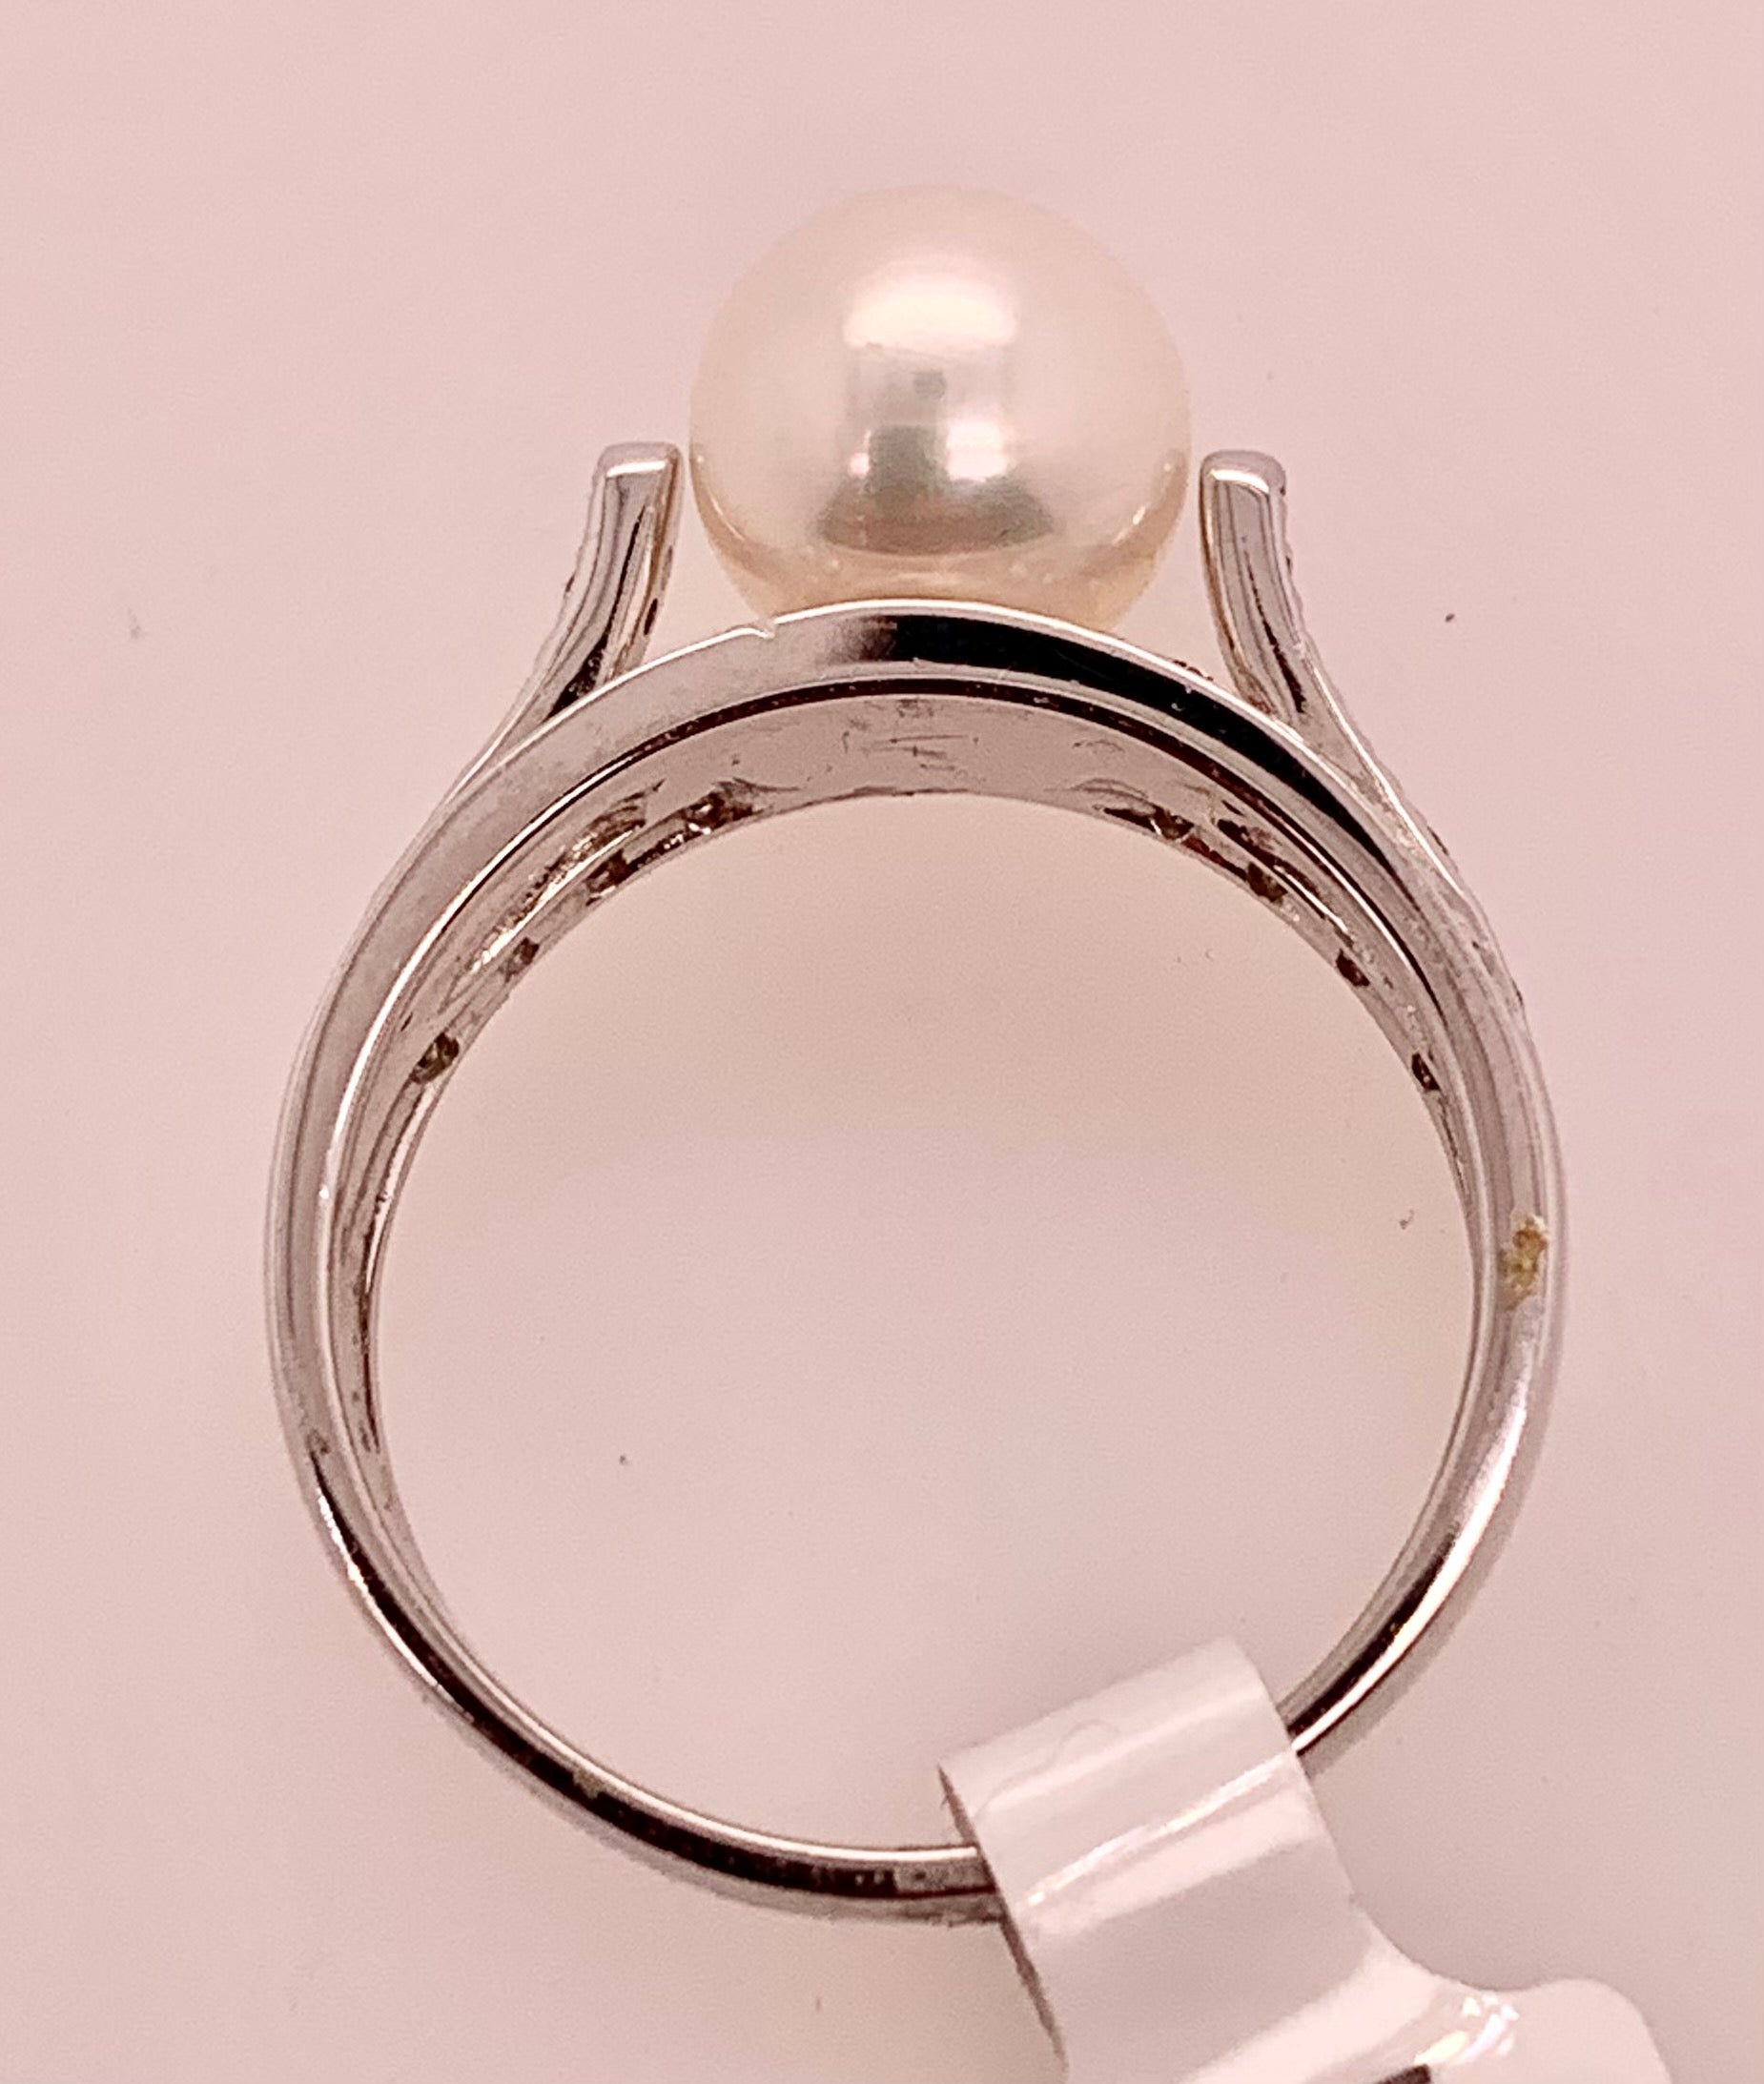 14K Cultured Pearl & Diamond Ring